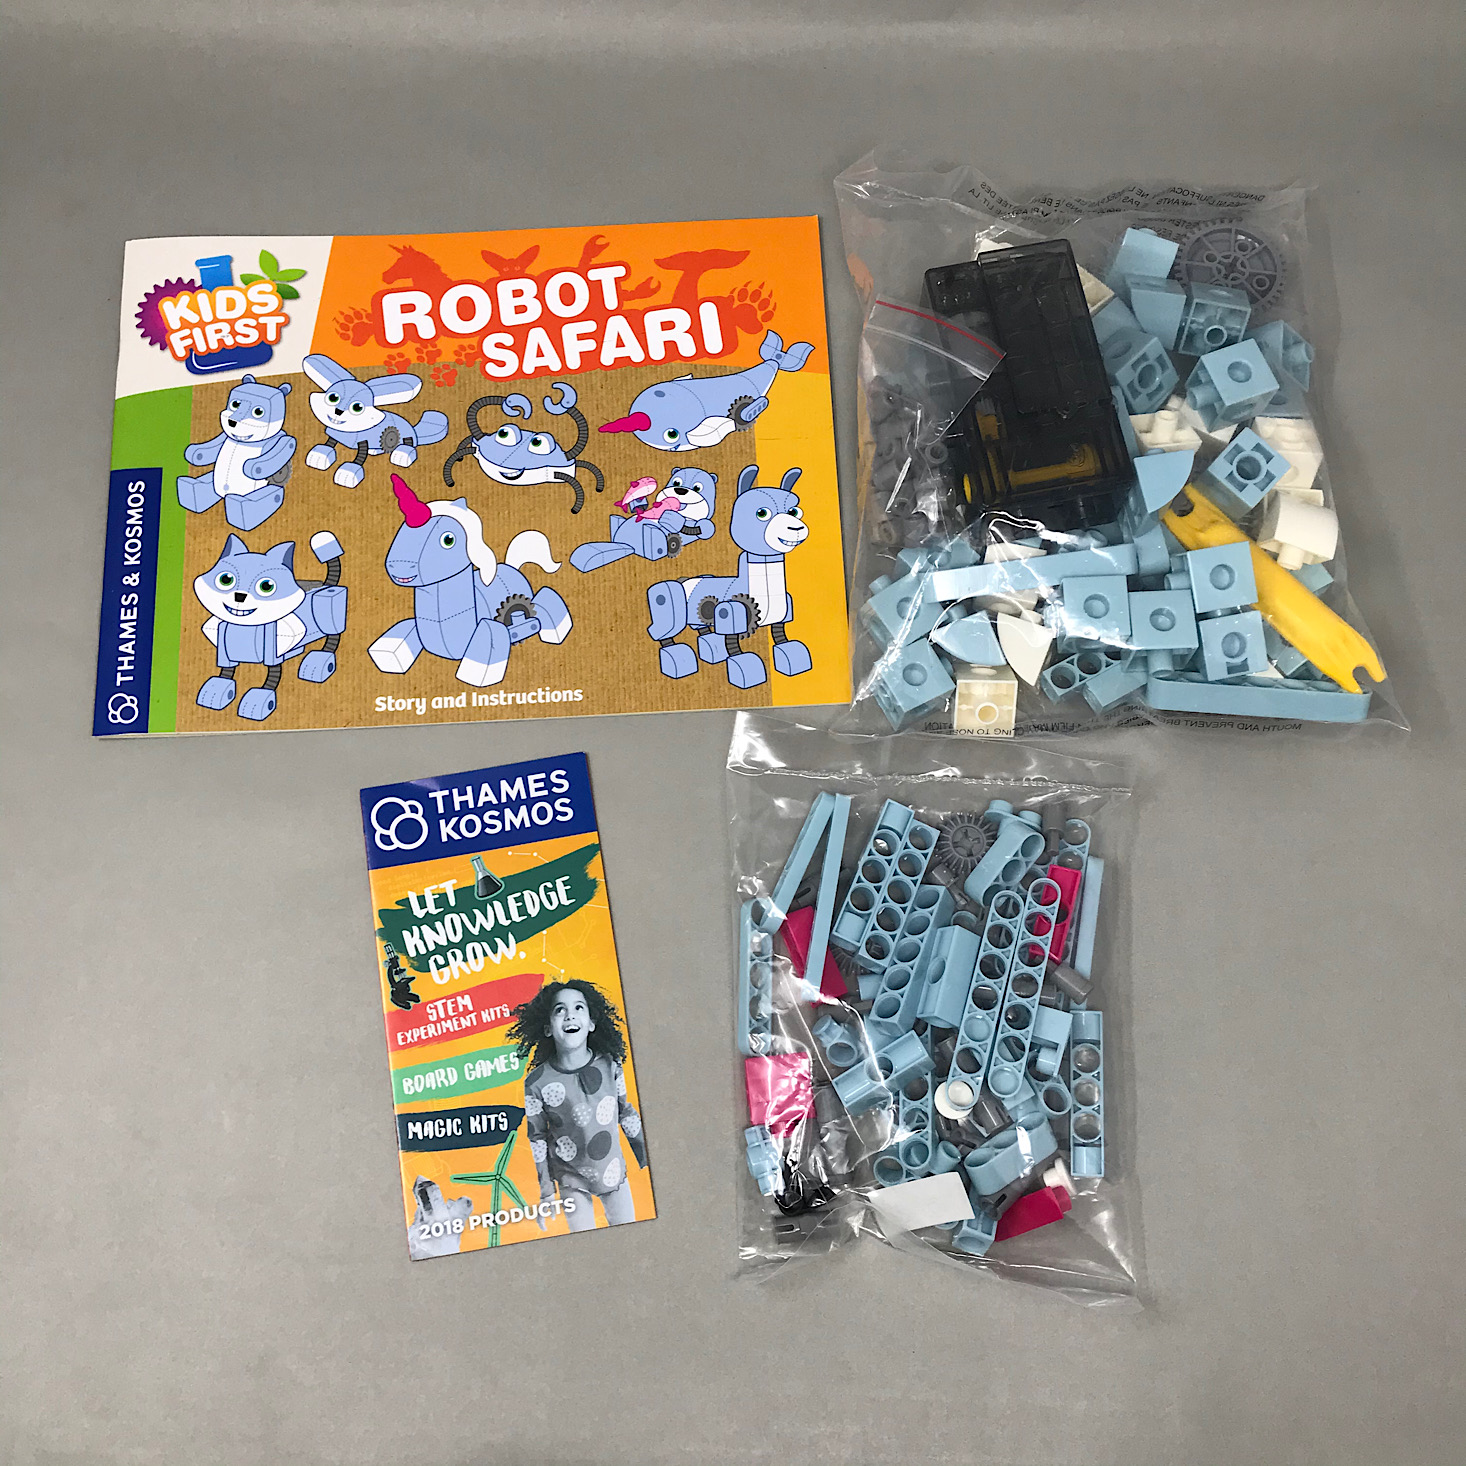 Amazon STEM Toy Club Review, Ages 5-7: Robot Safari